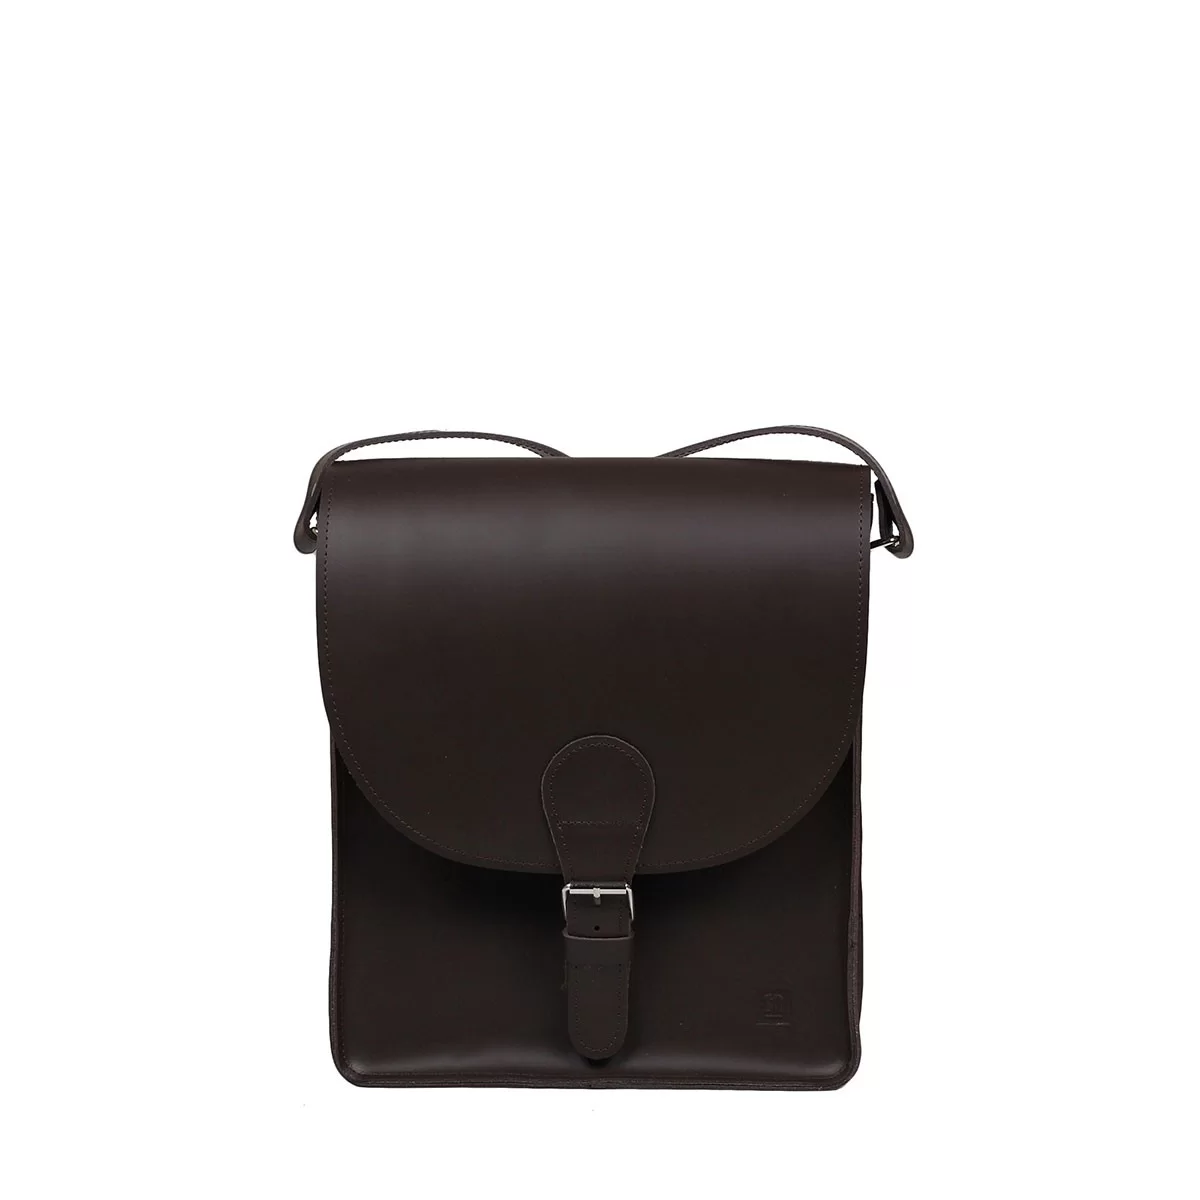 Bebe Ramie Stripe Floral Satchel Handbag - Women's handbags